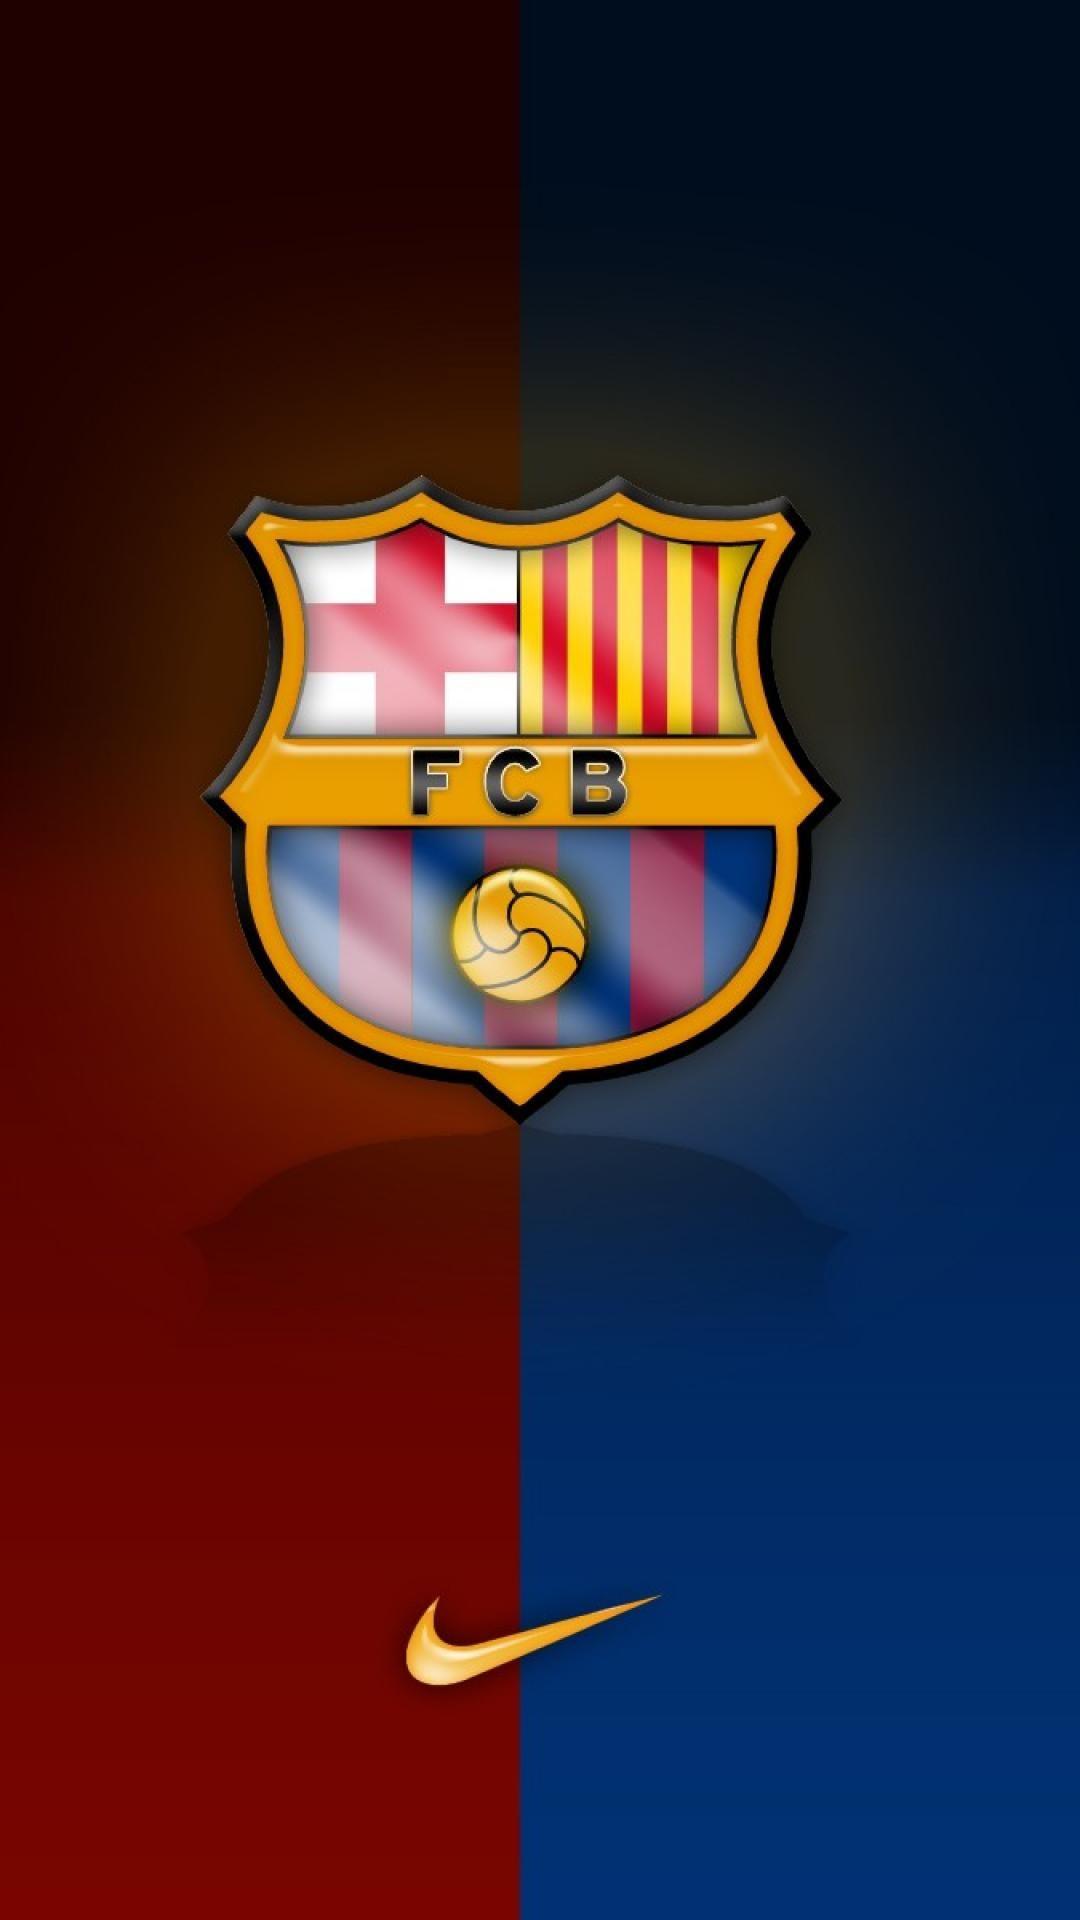 Fc barcelona logo wallpaper